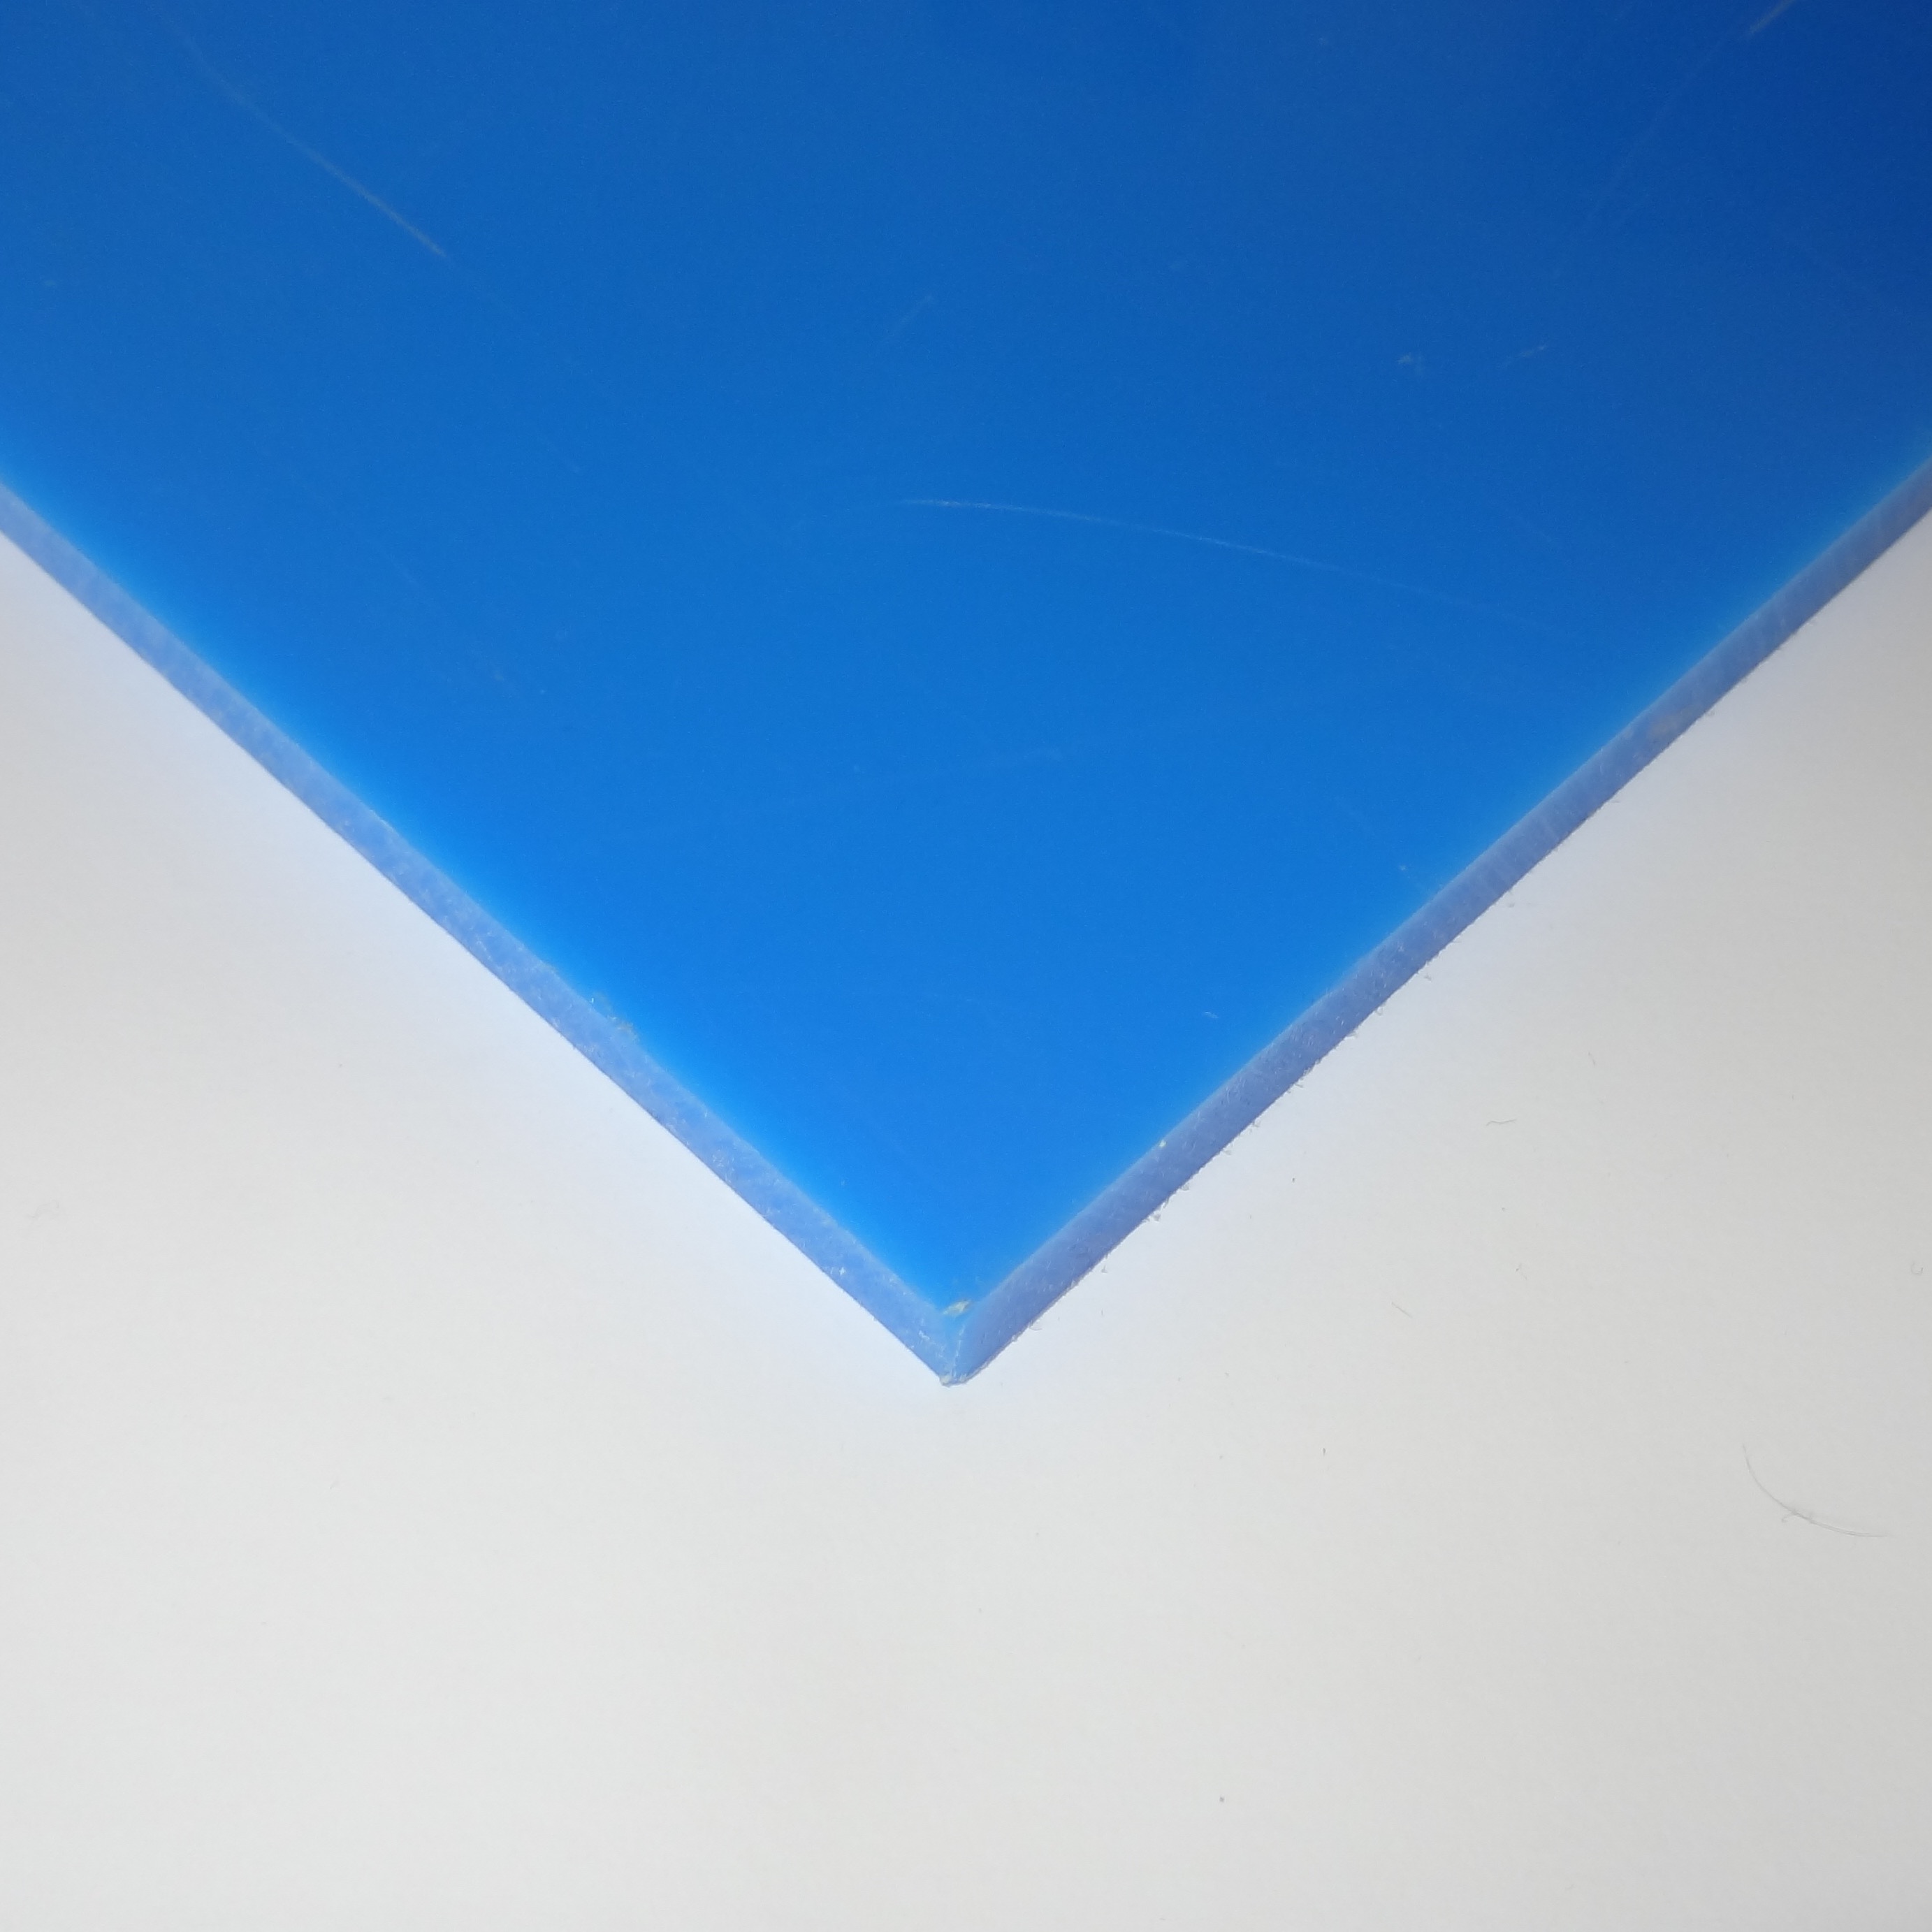 2" thick NYLATRON® MC 901 Unfilled Cast NYLON Laminate Sheet, blue,  24"W x 48"L sheet